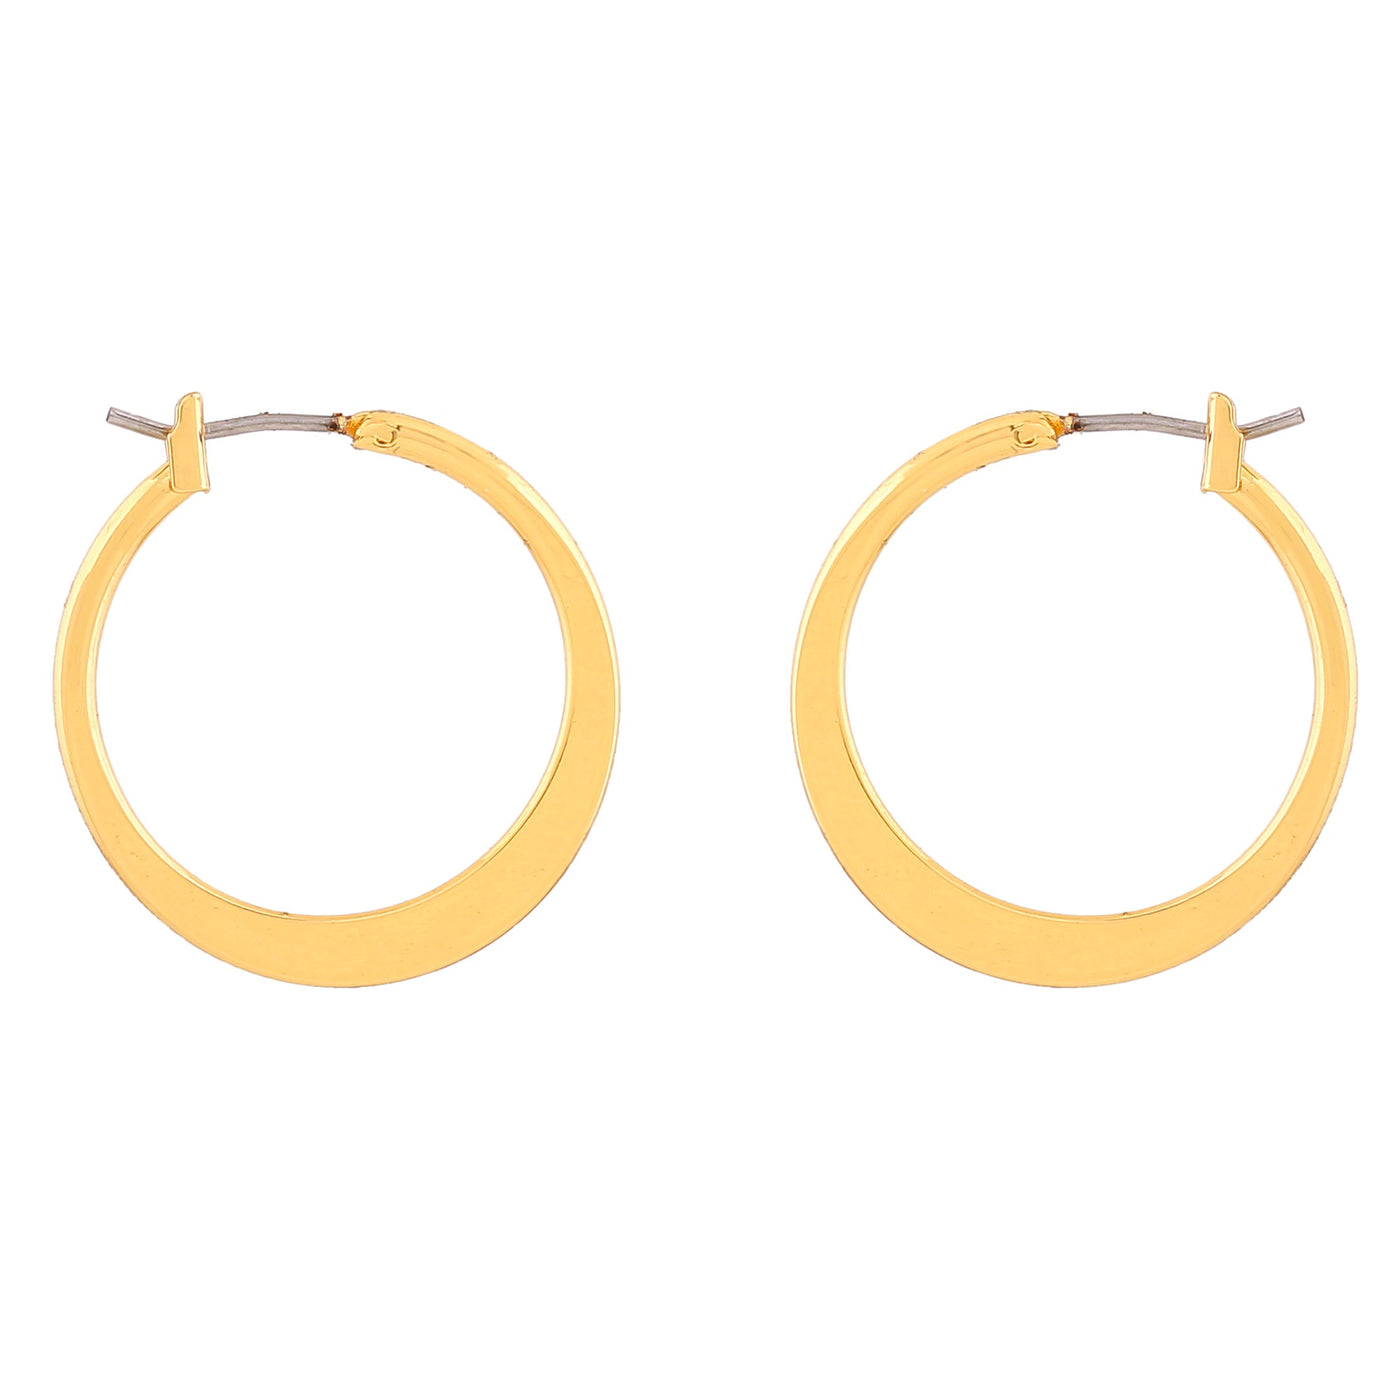 Estele Gold Plated Fashionable Hoop Earrings for Women